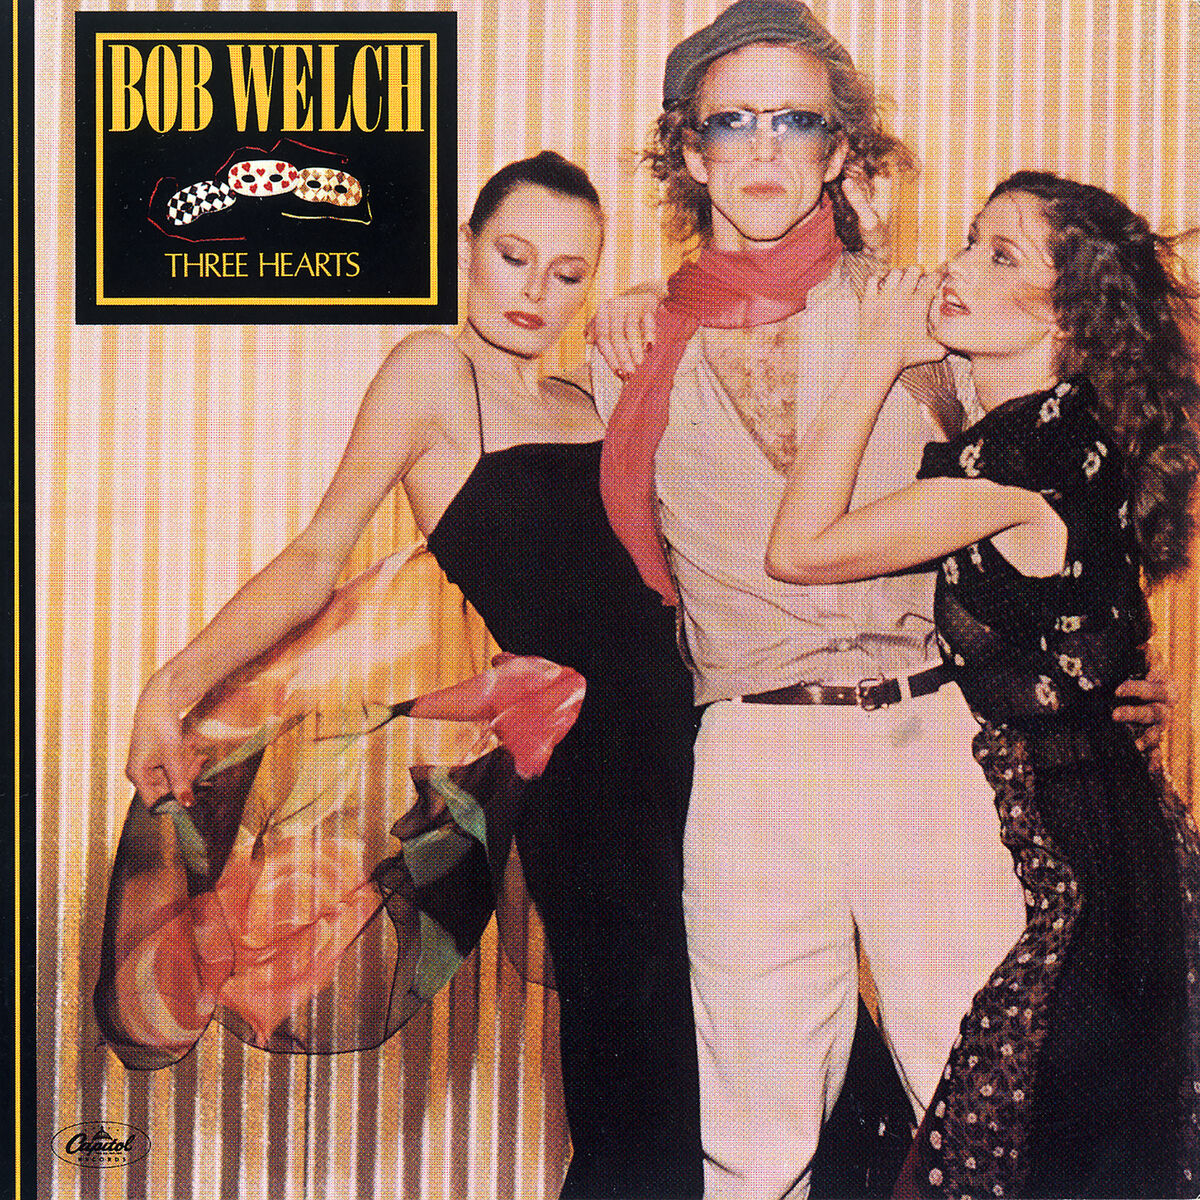 Bob Welch: albums, songs, playlists | Listen on Deezer